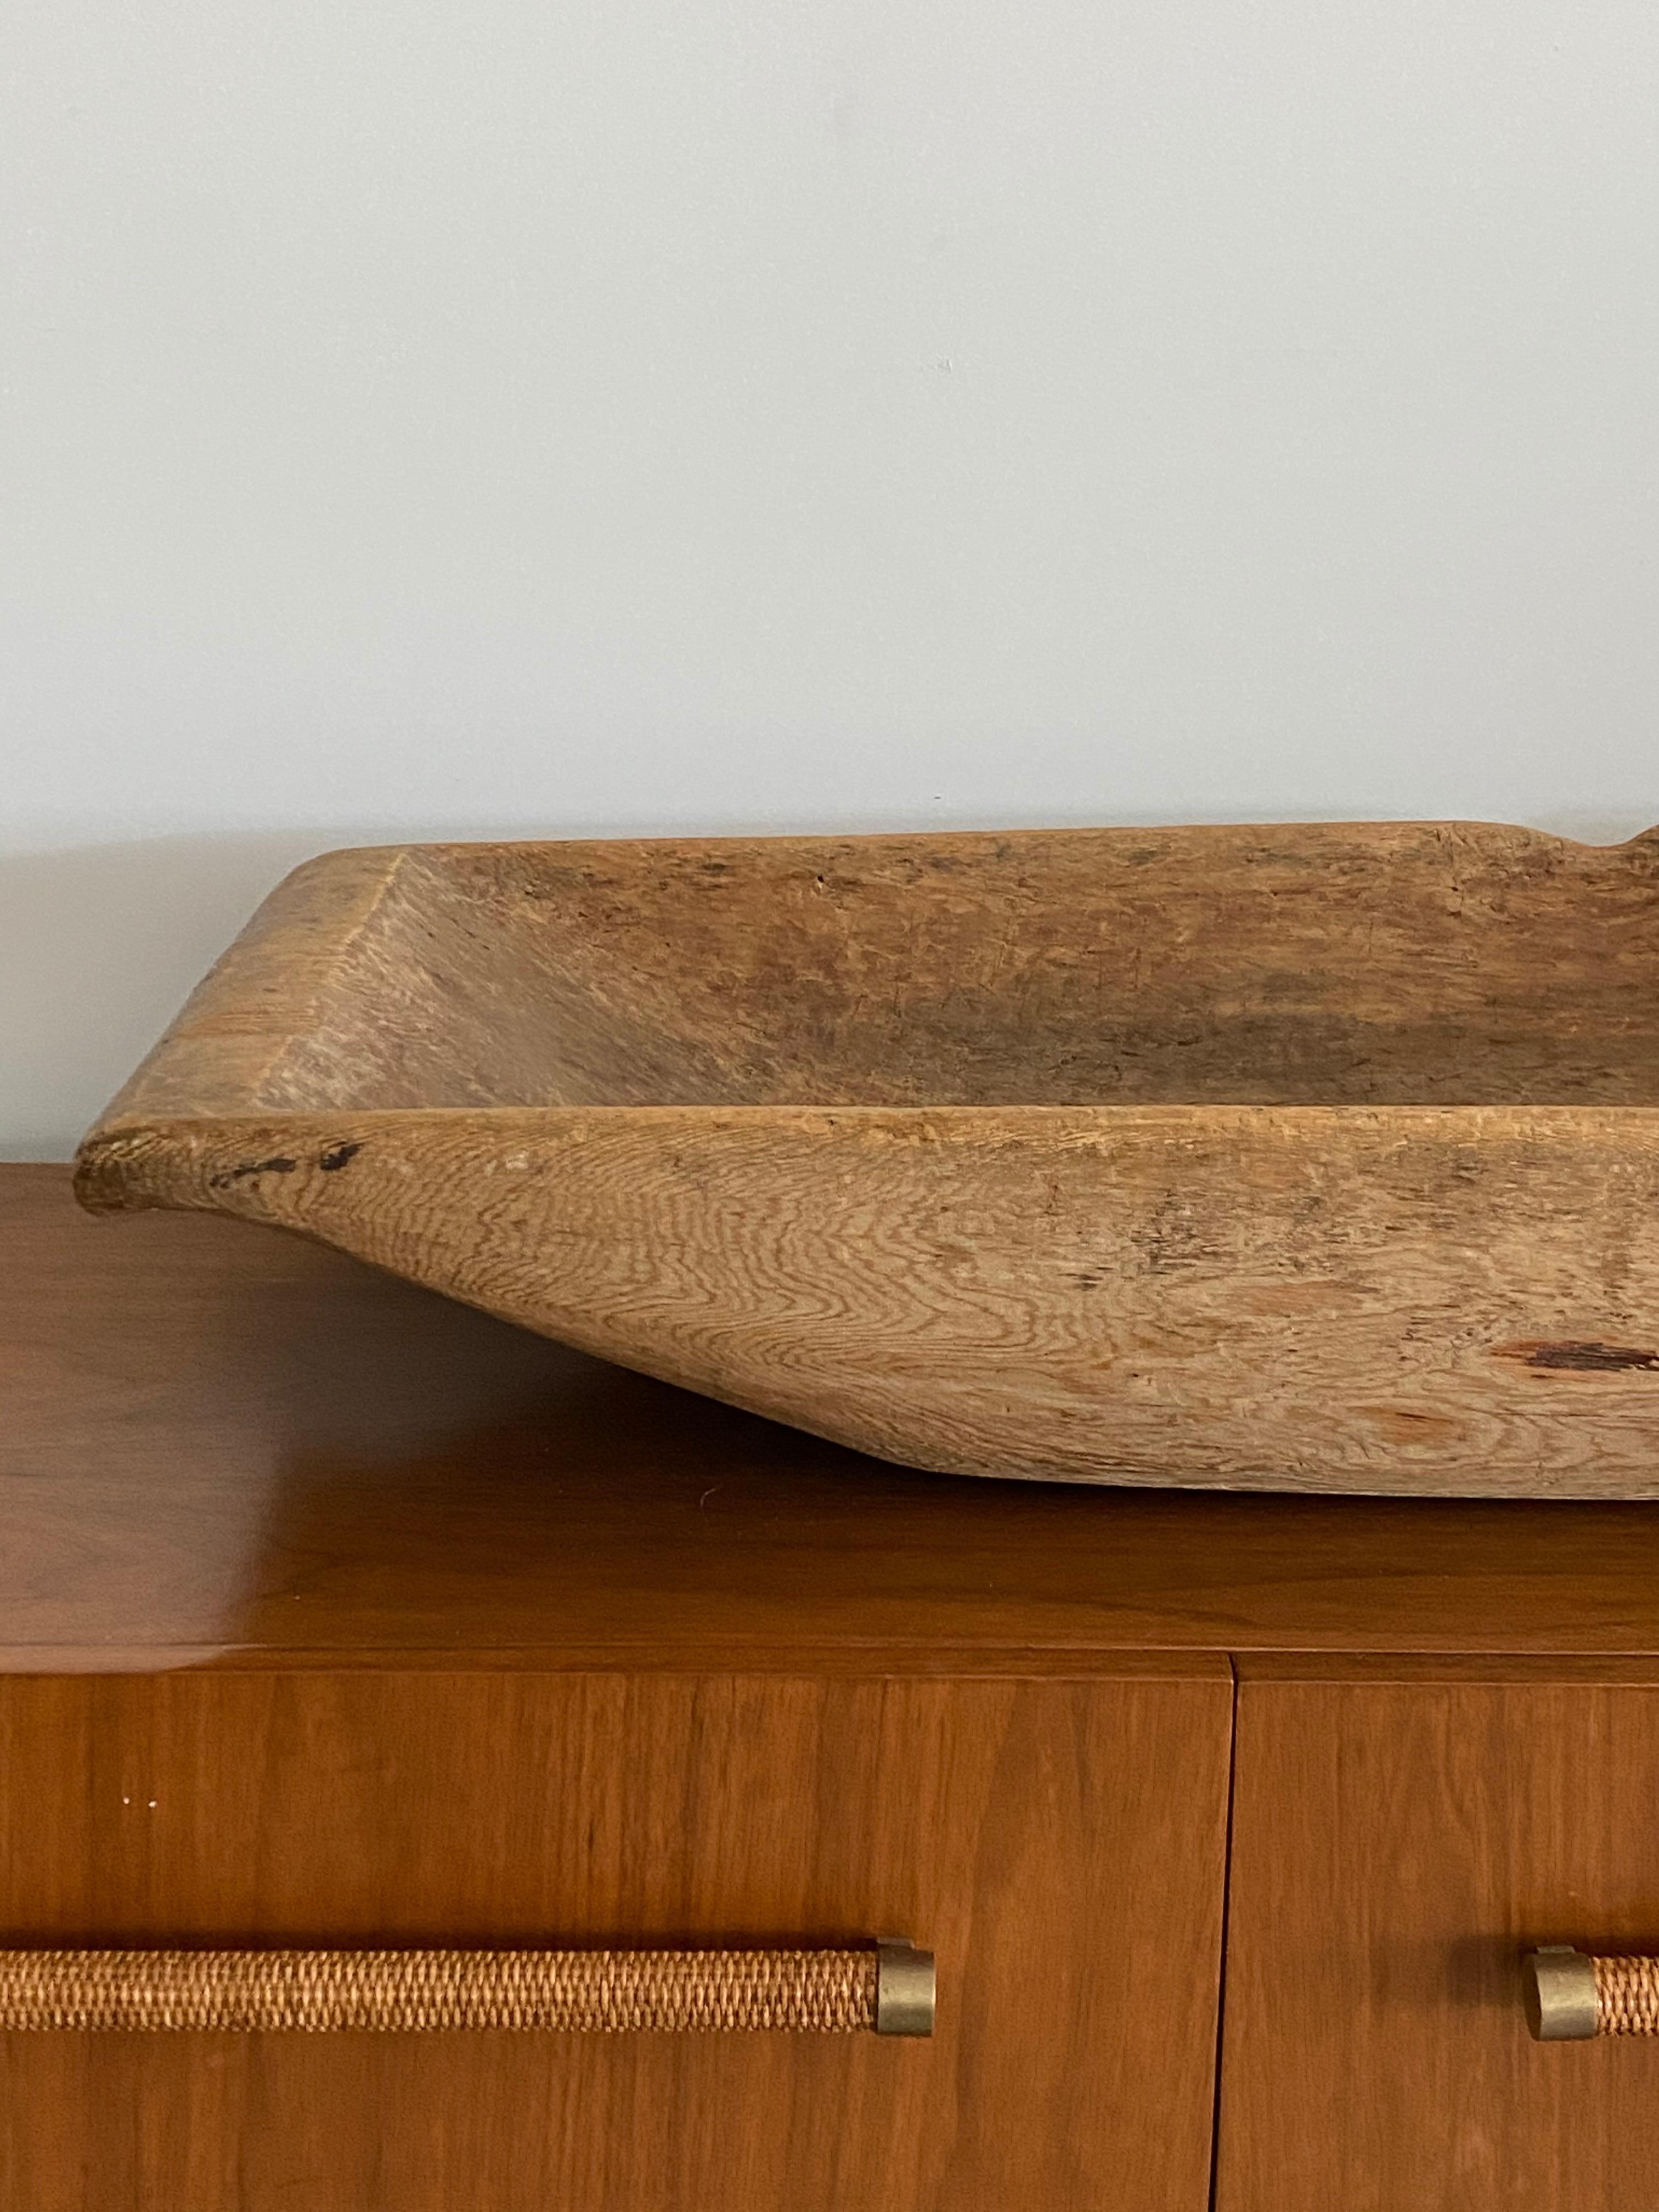 Wood Swedish Folk Art, Large Serving Bowl or Tray, Solid Pine, 19th Century